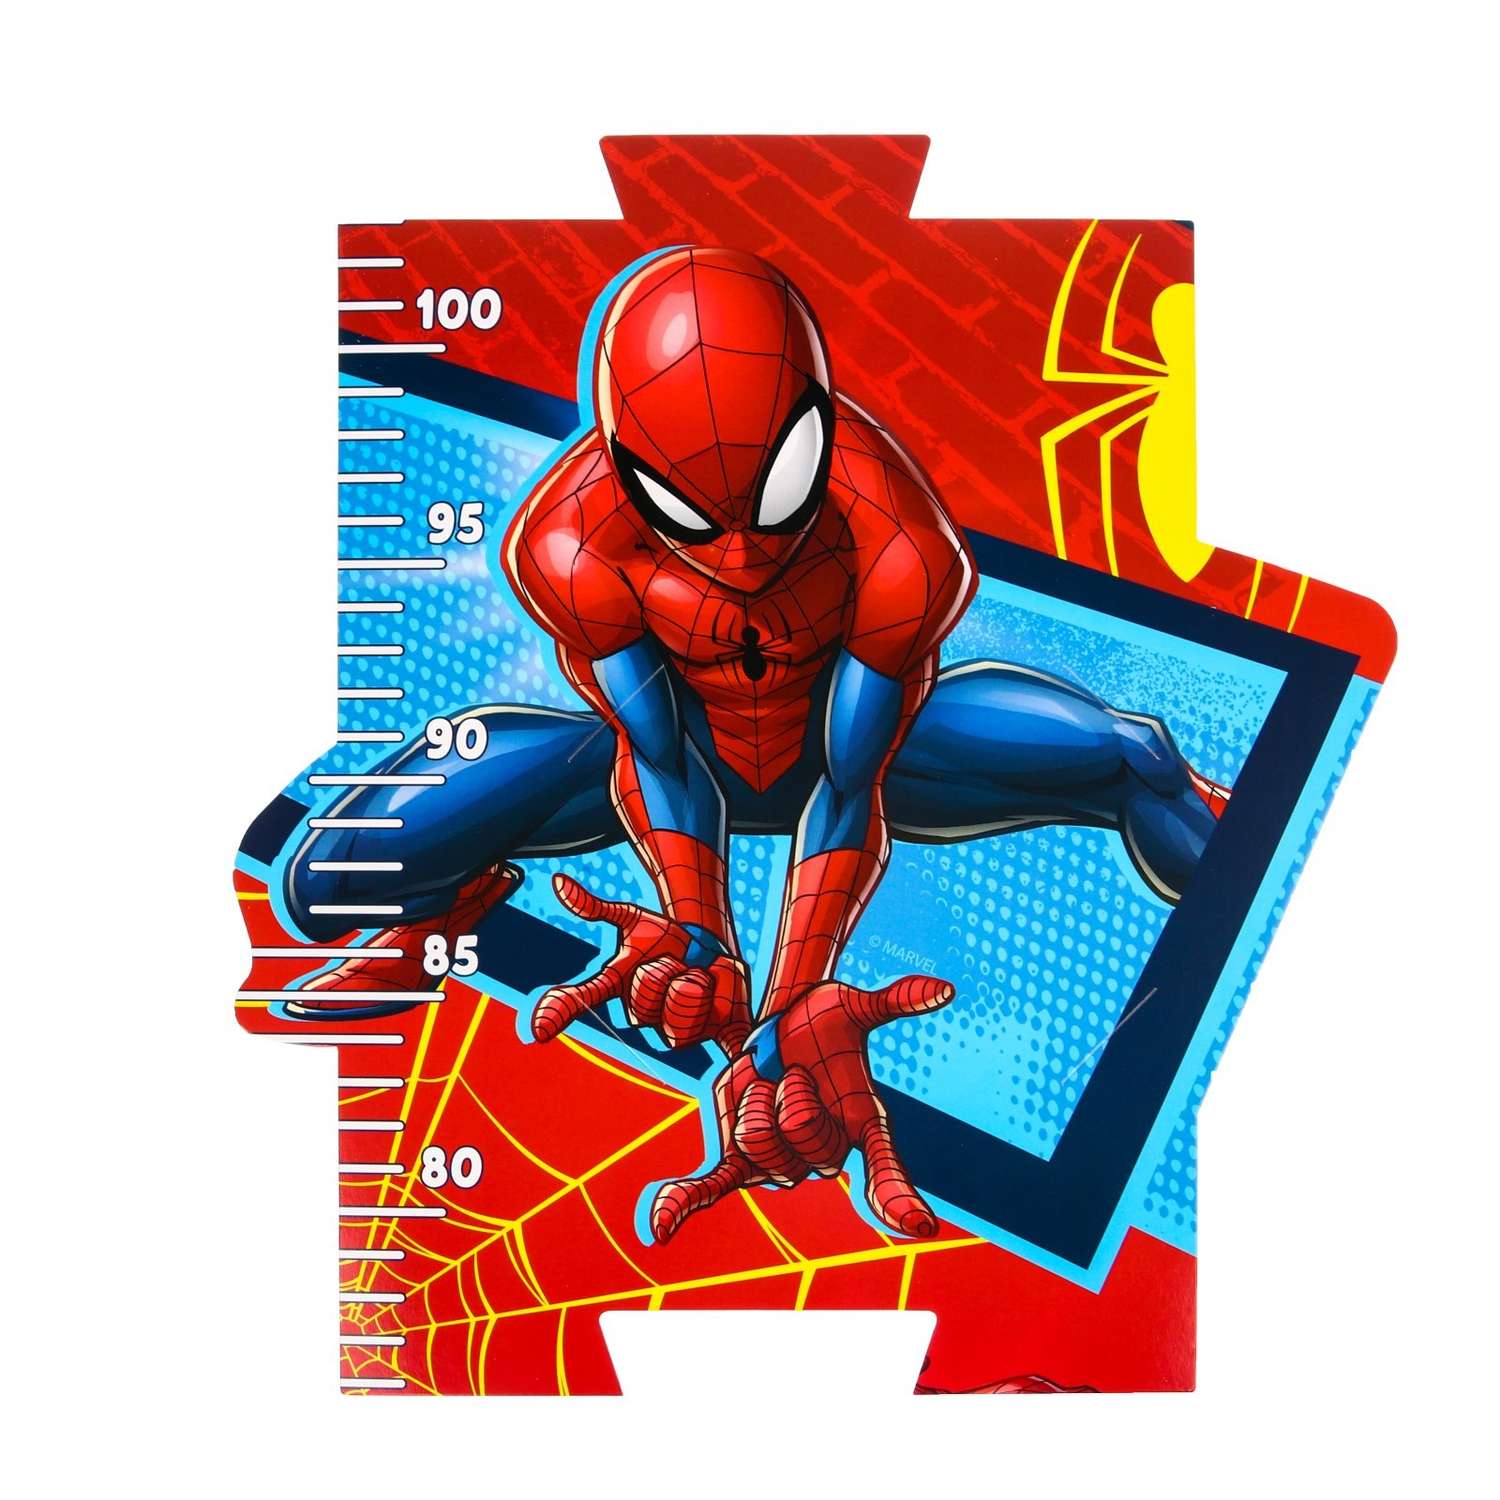 Ростомер Marvel Человек-паук - фото 5